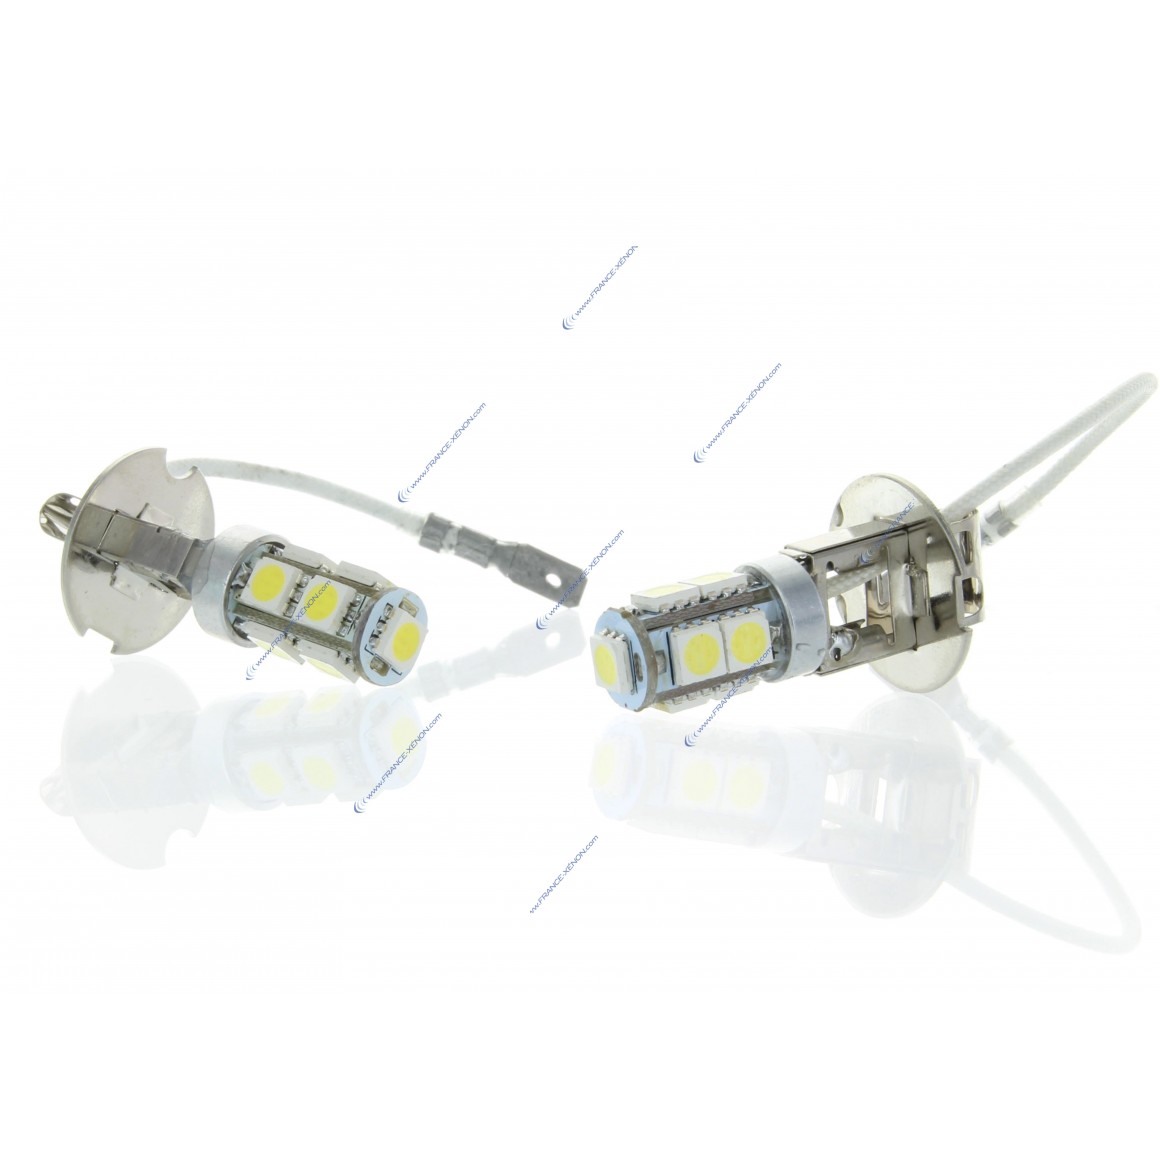 2 x Ampoules H3 24V - LED SMD 9 LED - Lampe de camion / Signalisation -  Blanc - France-Xenon